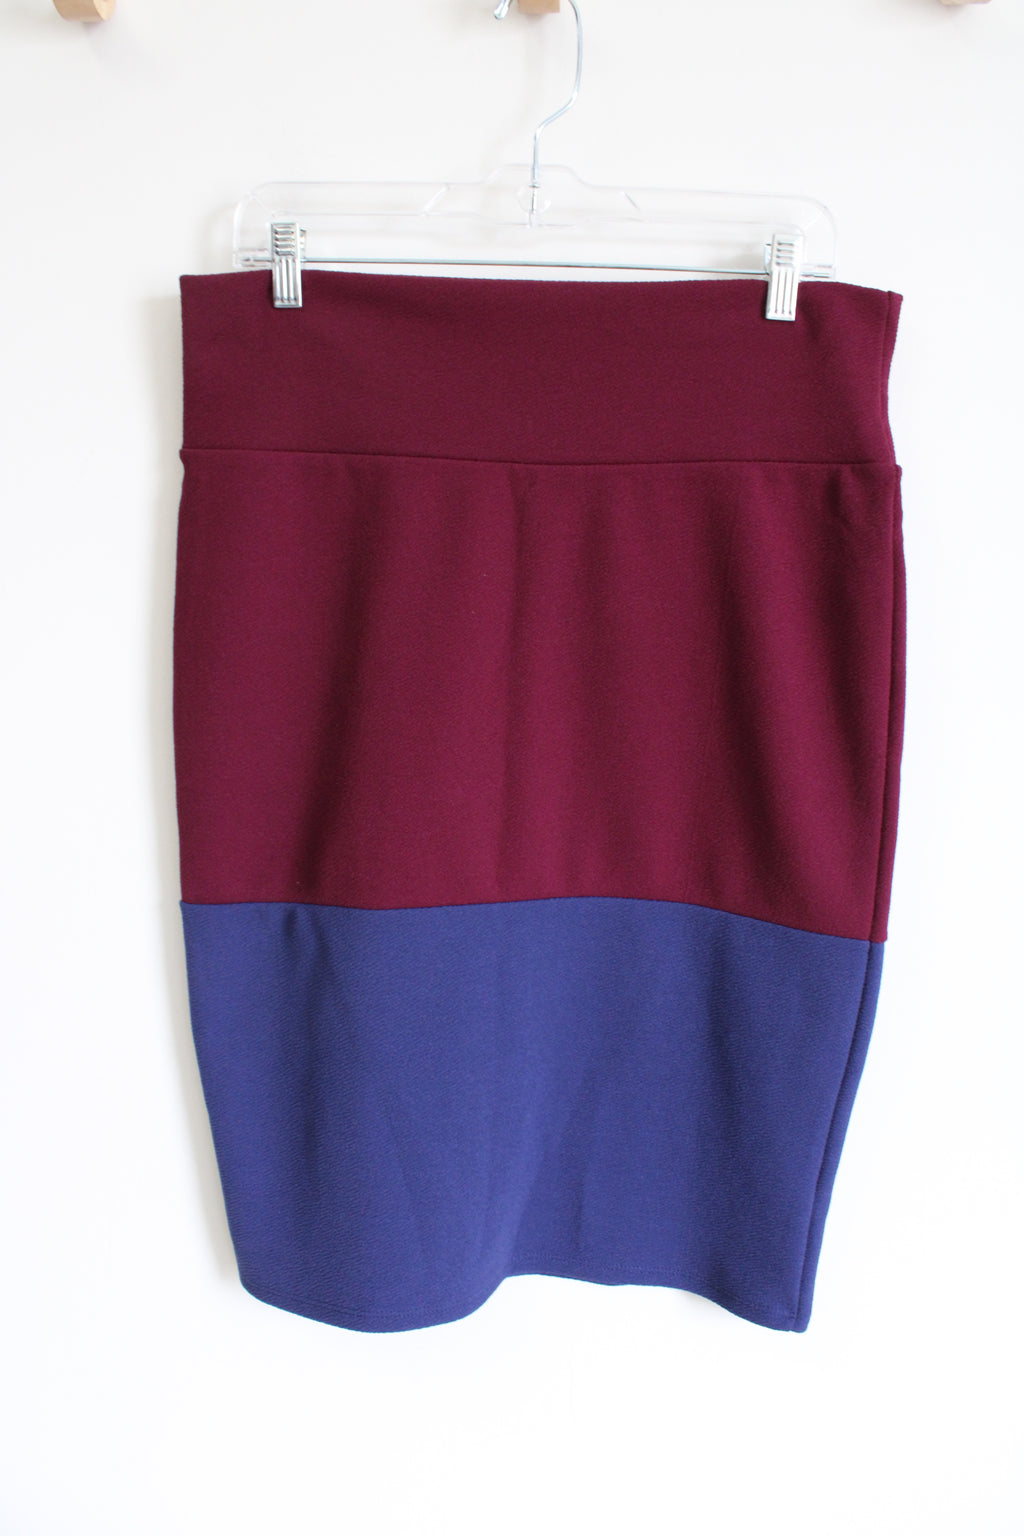 LuLaRoe Navy Blue & Maroon Color Blocked Skirt | L